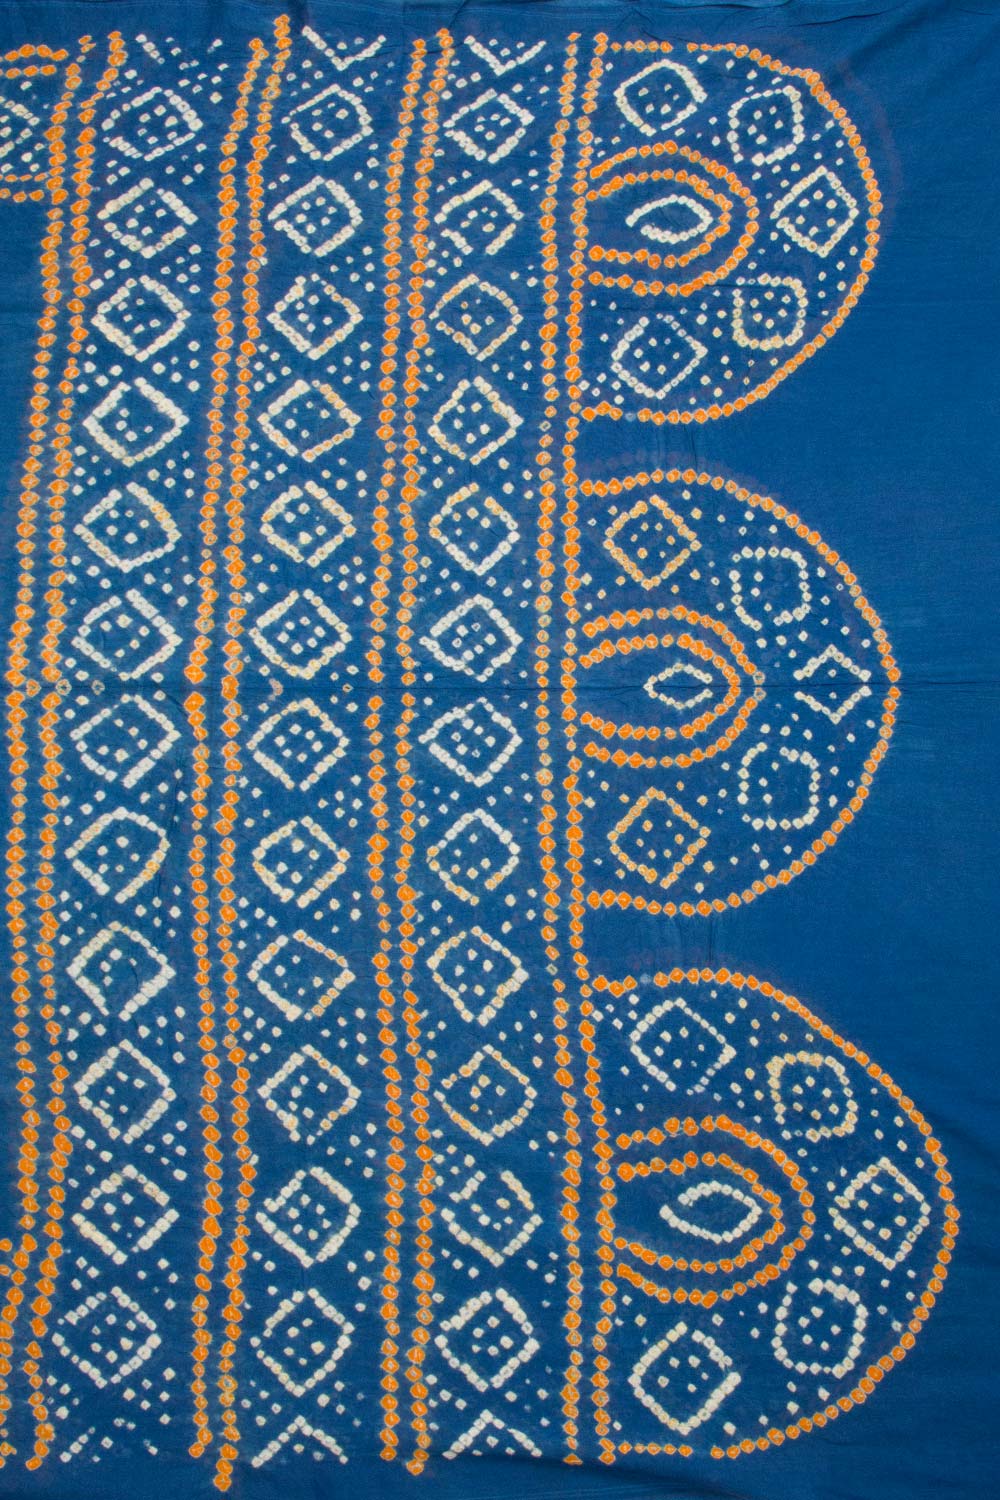 Yale Blue Handcrafted Bandhani Mulmul Cotton Saree 10062530